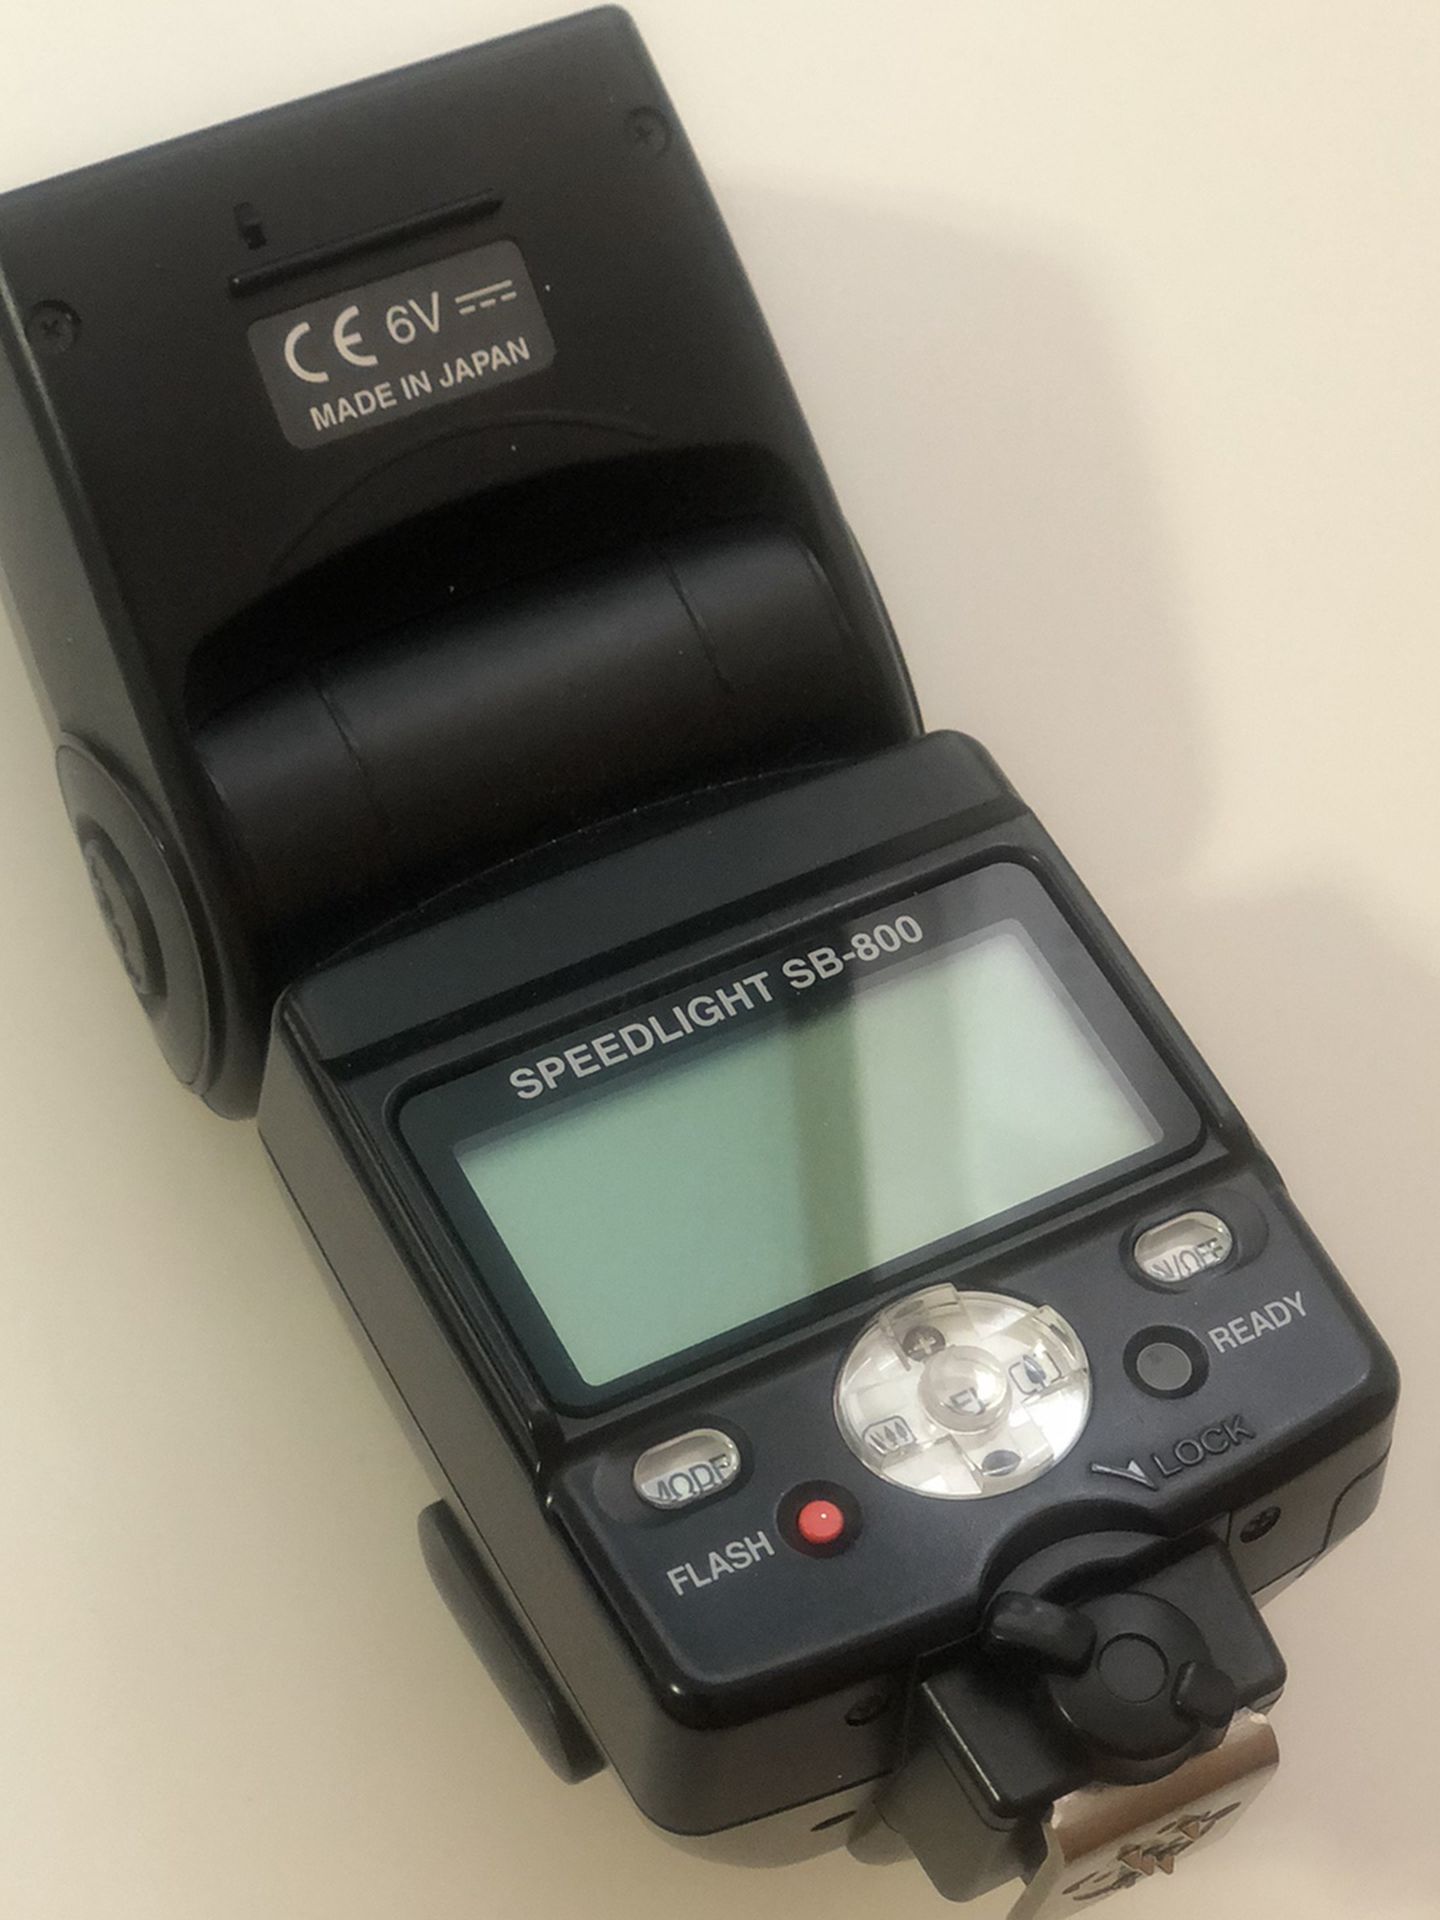 Nikon SB-800 speedlight flash for Nikon digital SLR cameras